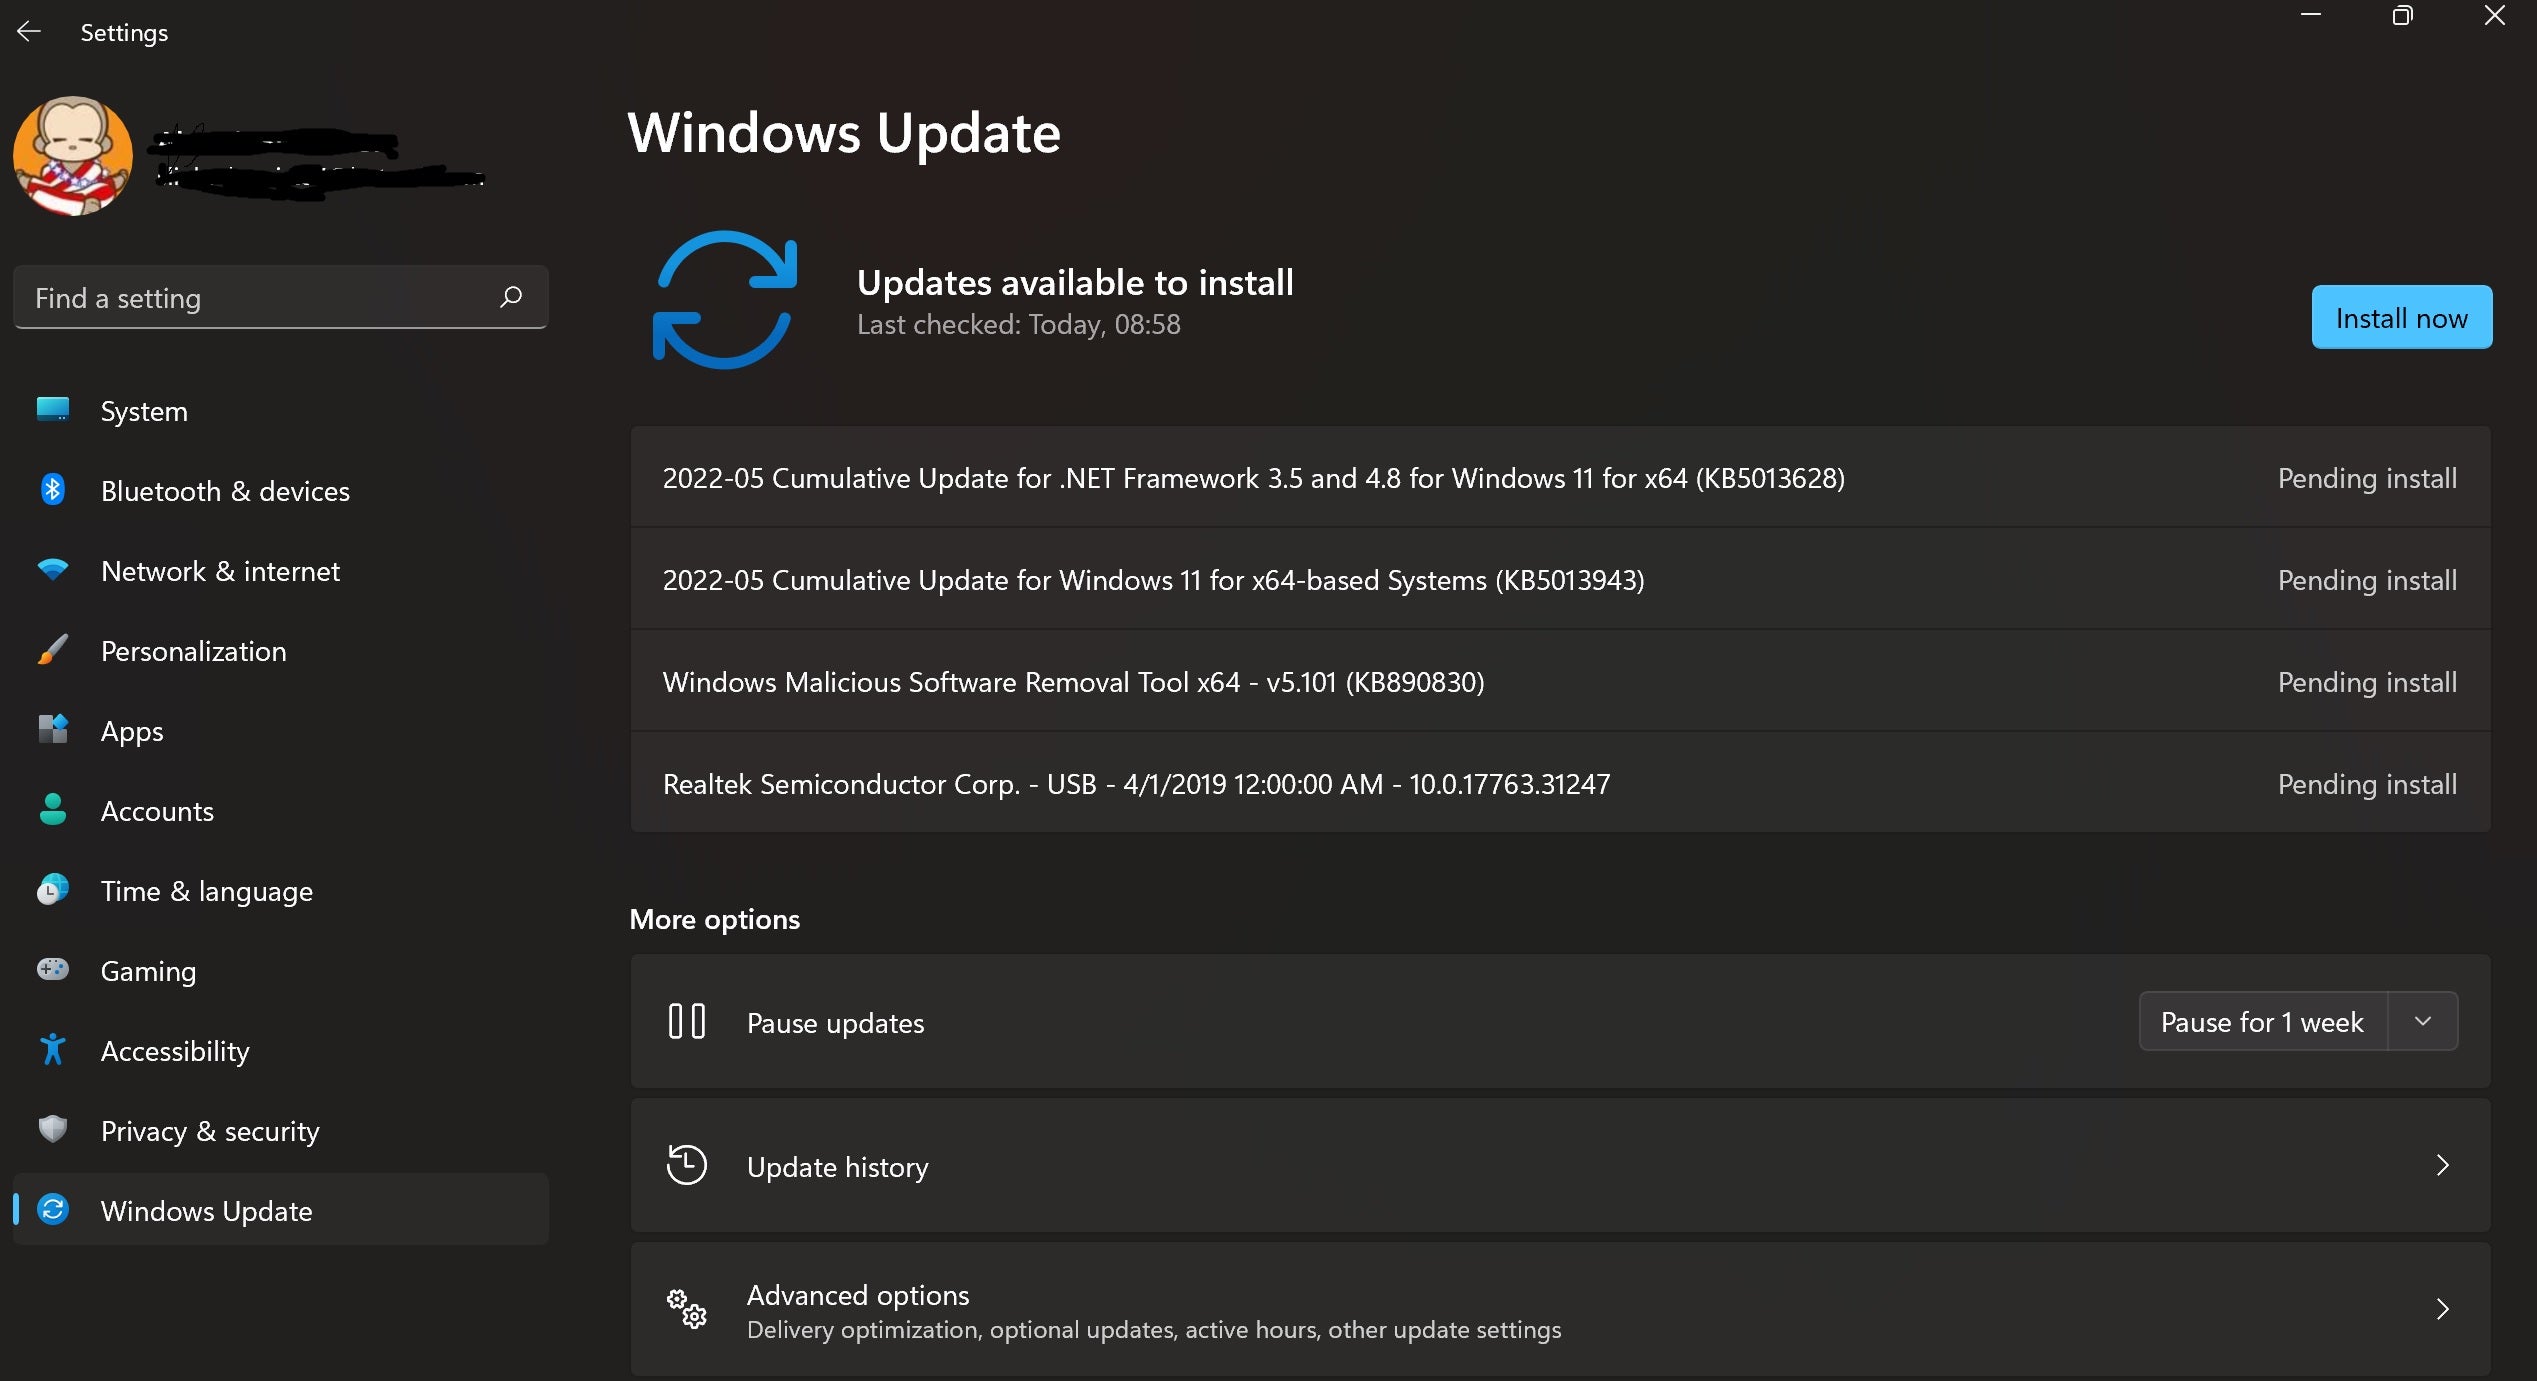 Windows update direct settings view